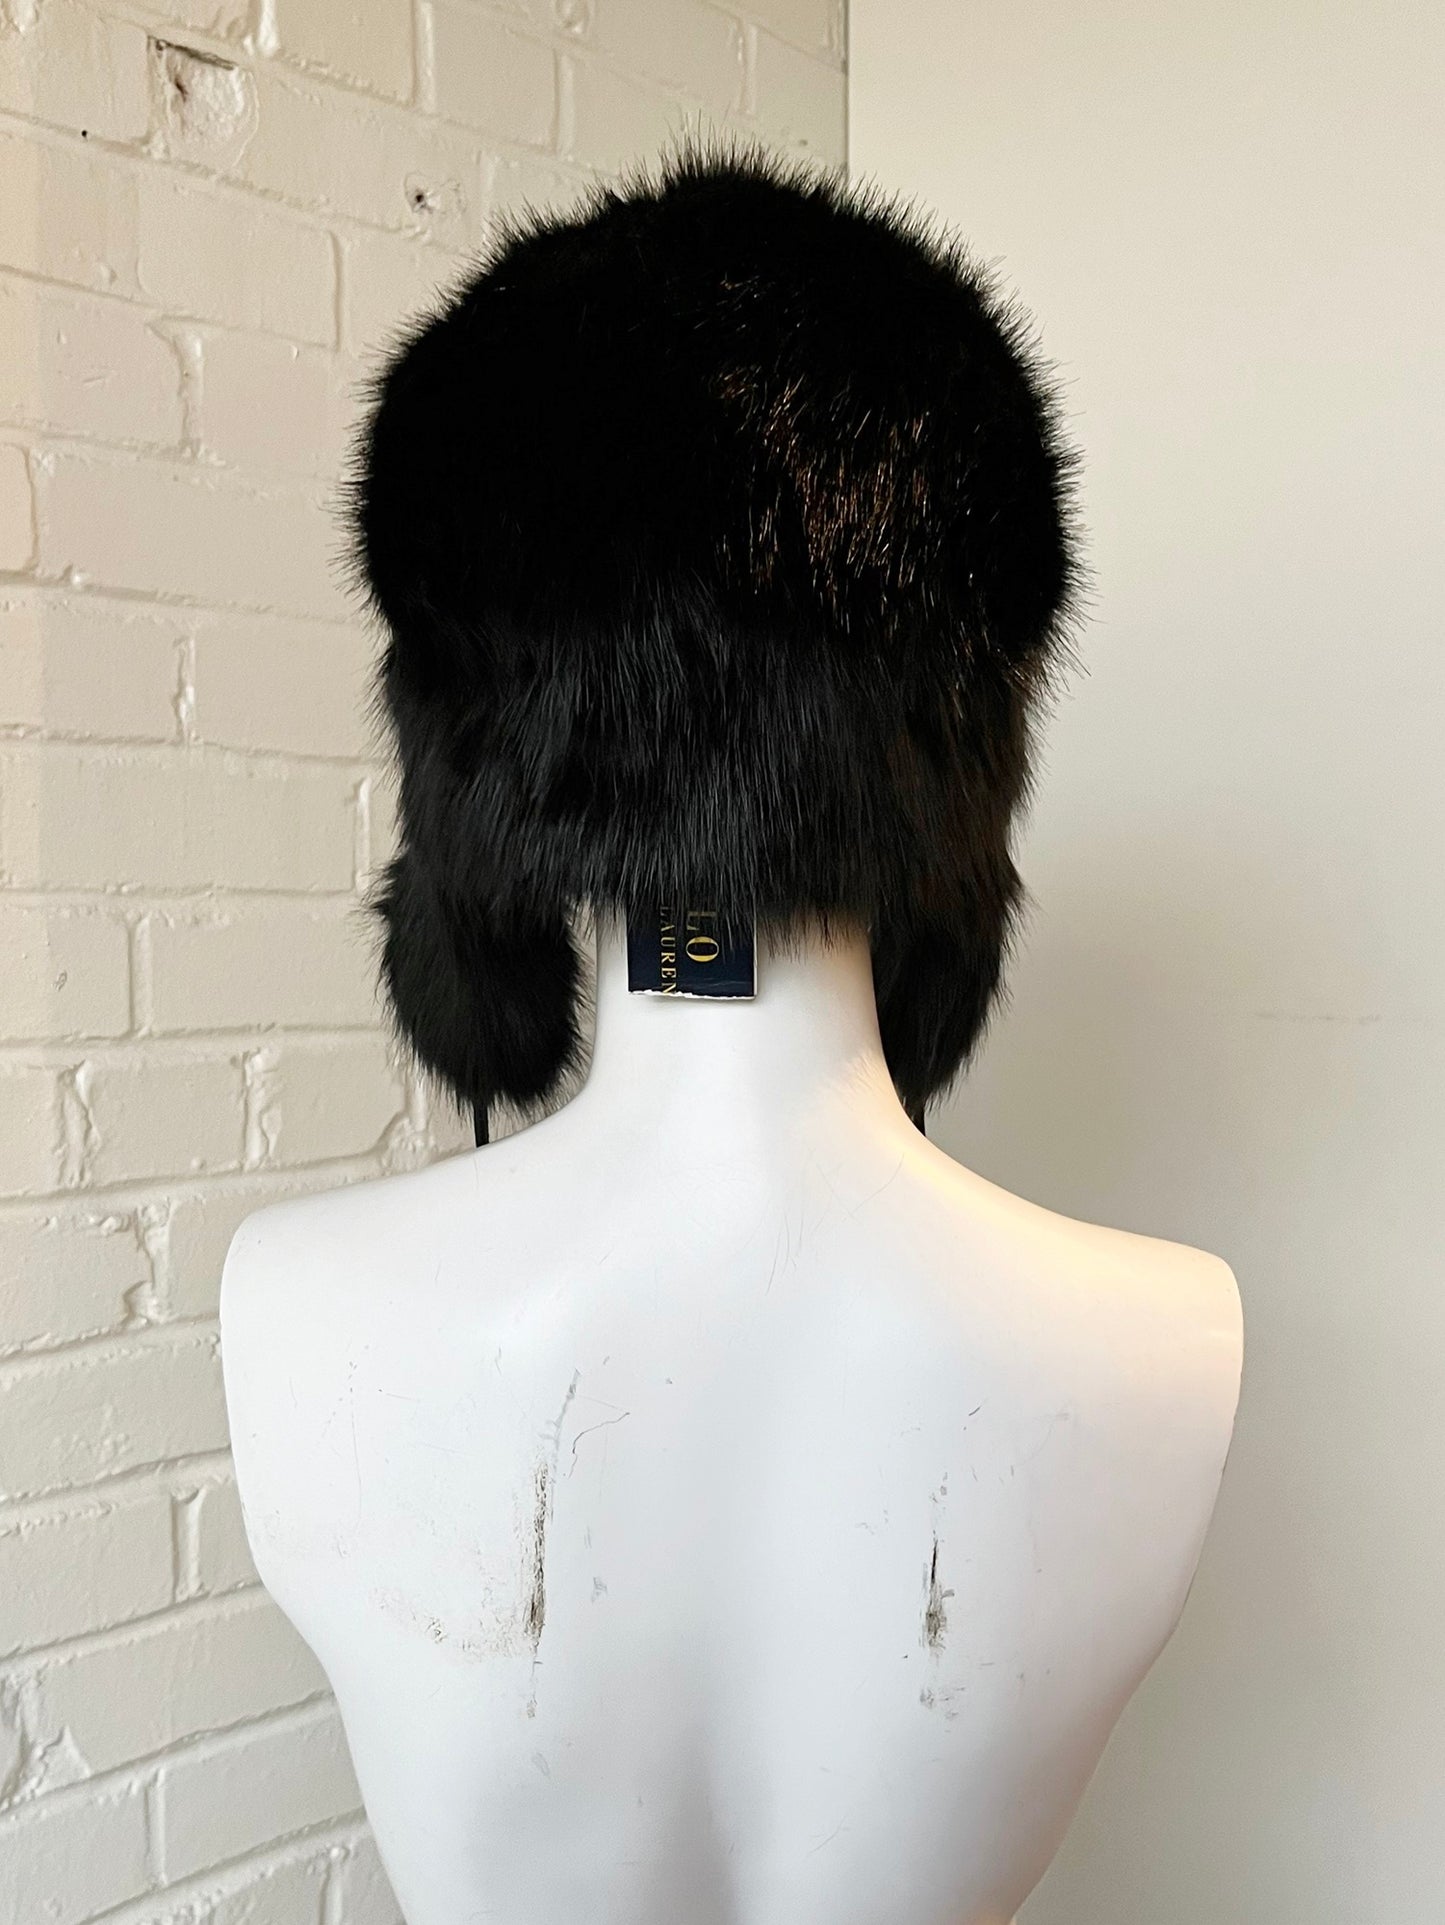 Faux Fur Ear Flap Hat Size Small/Medium NWT